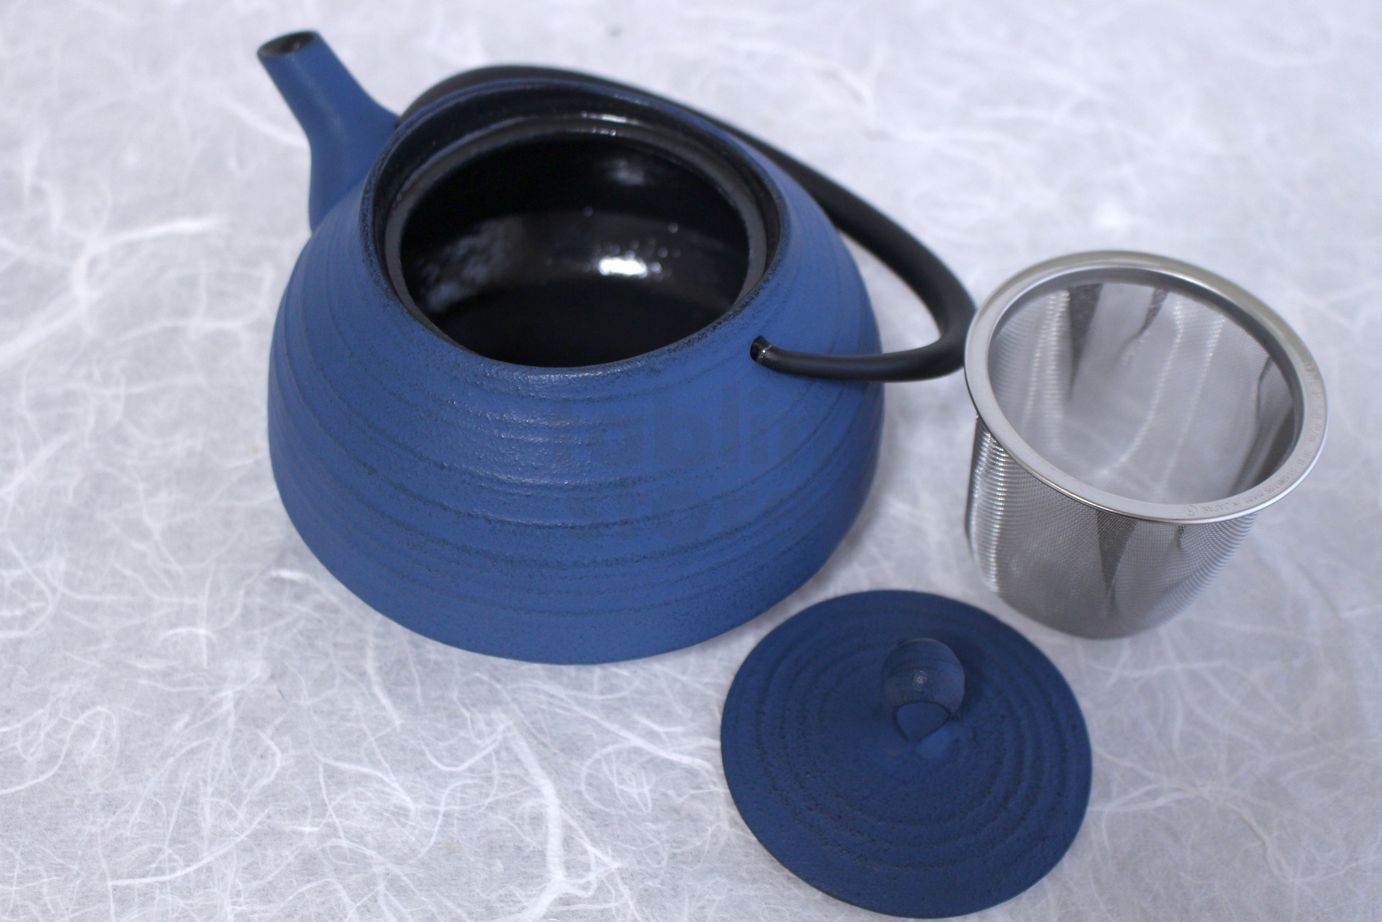 ITCHU-DO HAKEME Japanese Cast Iron Nambu tea pot Japan blue 400ml